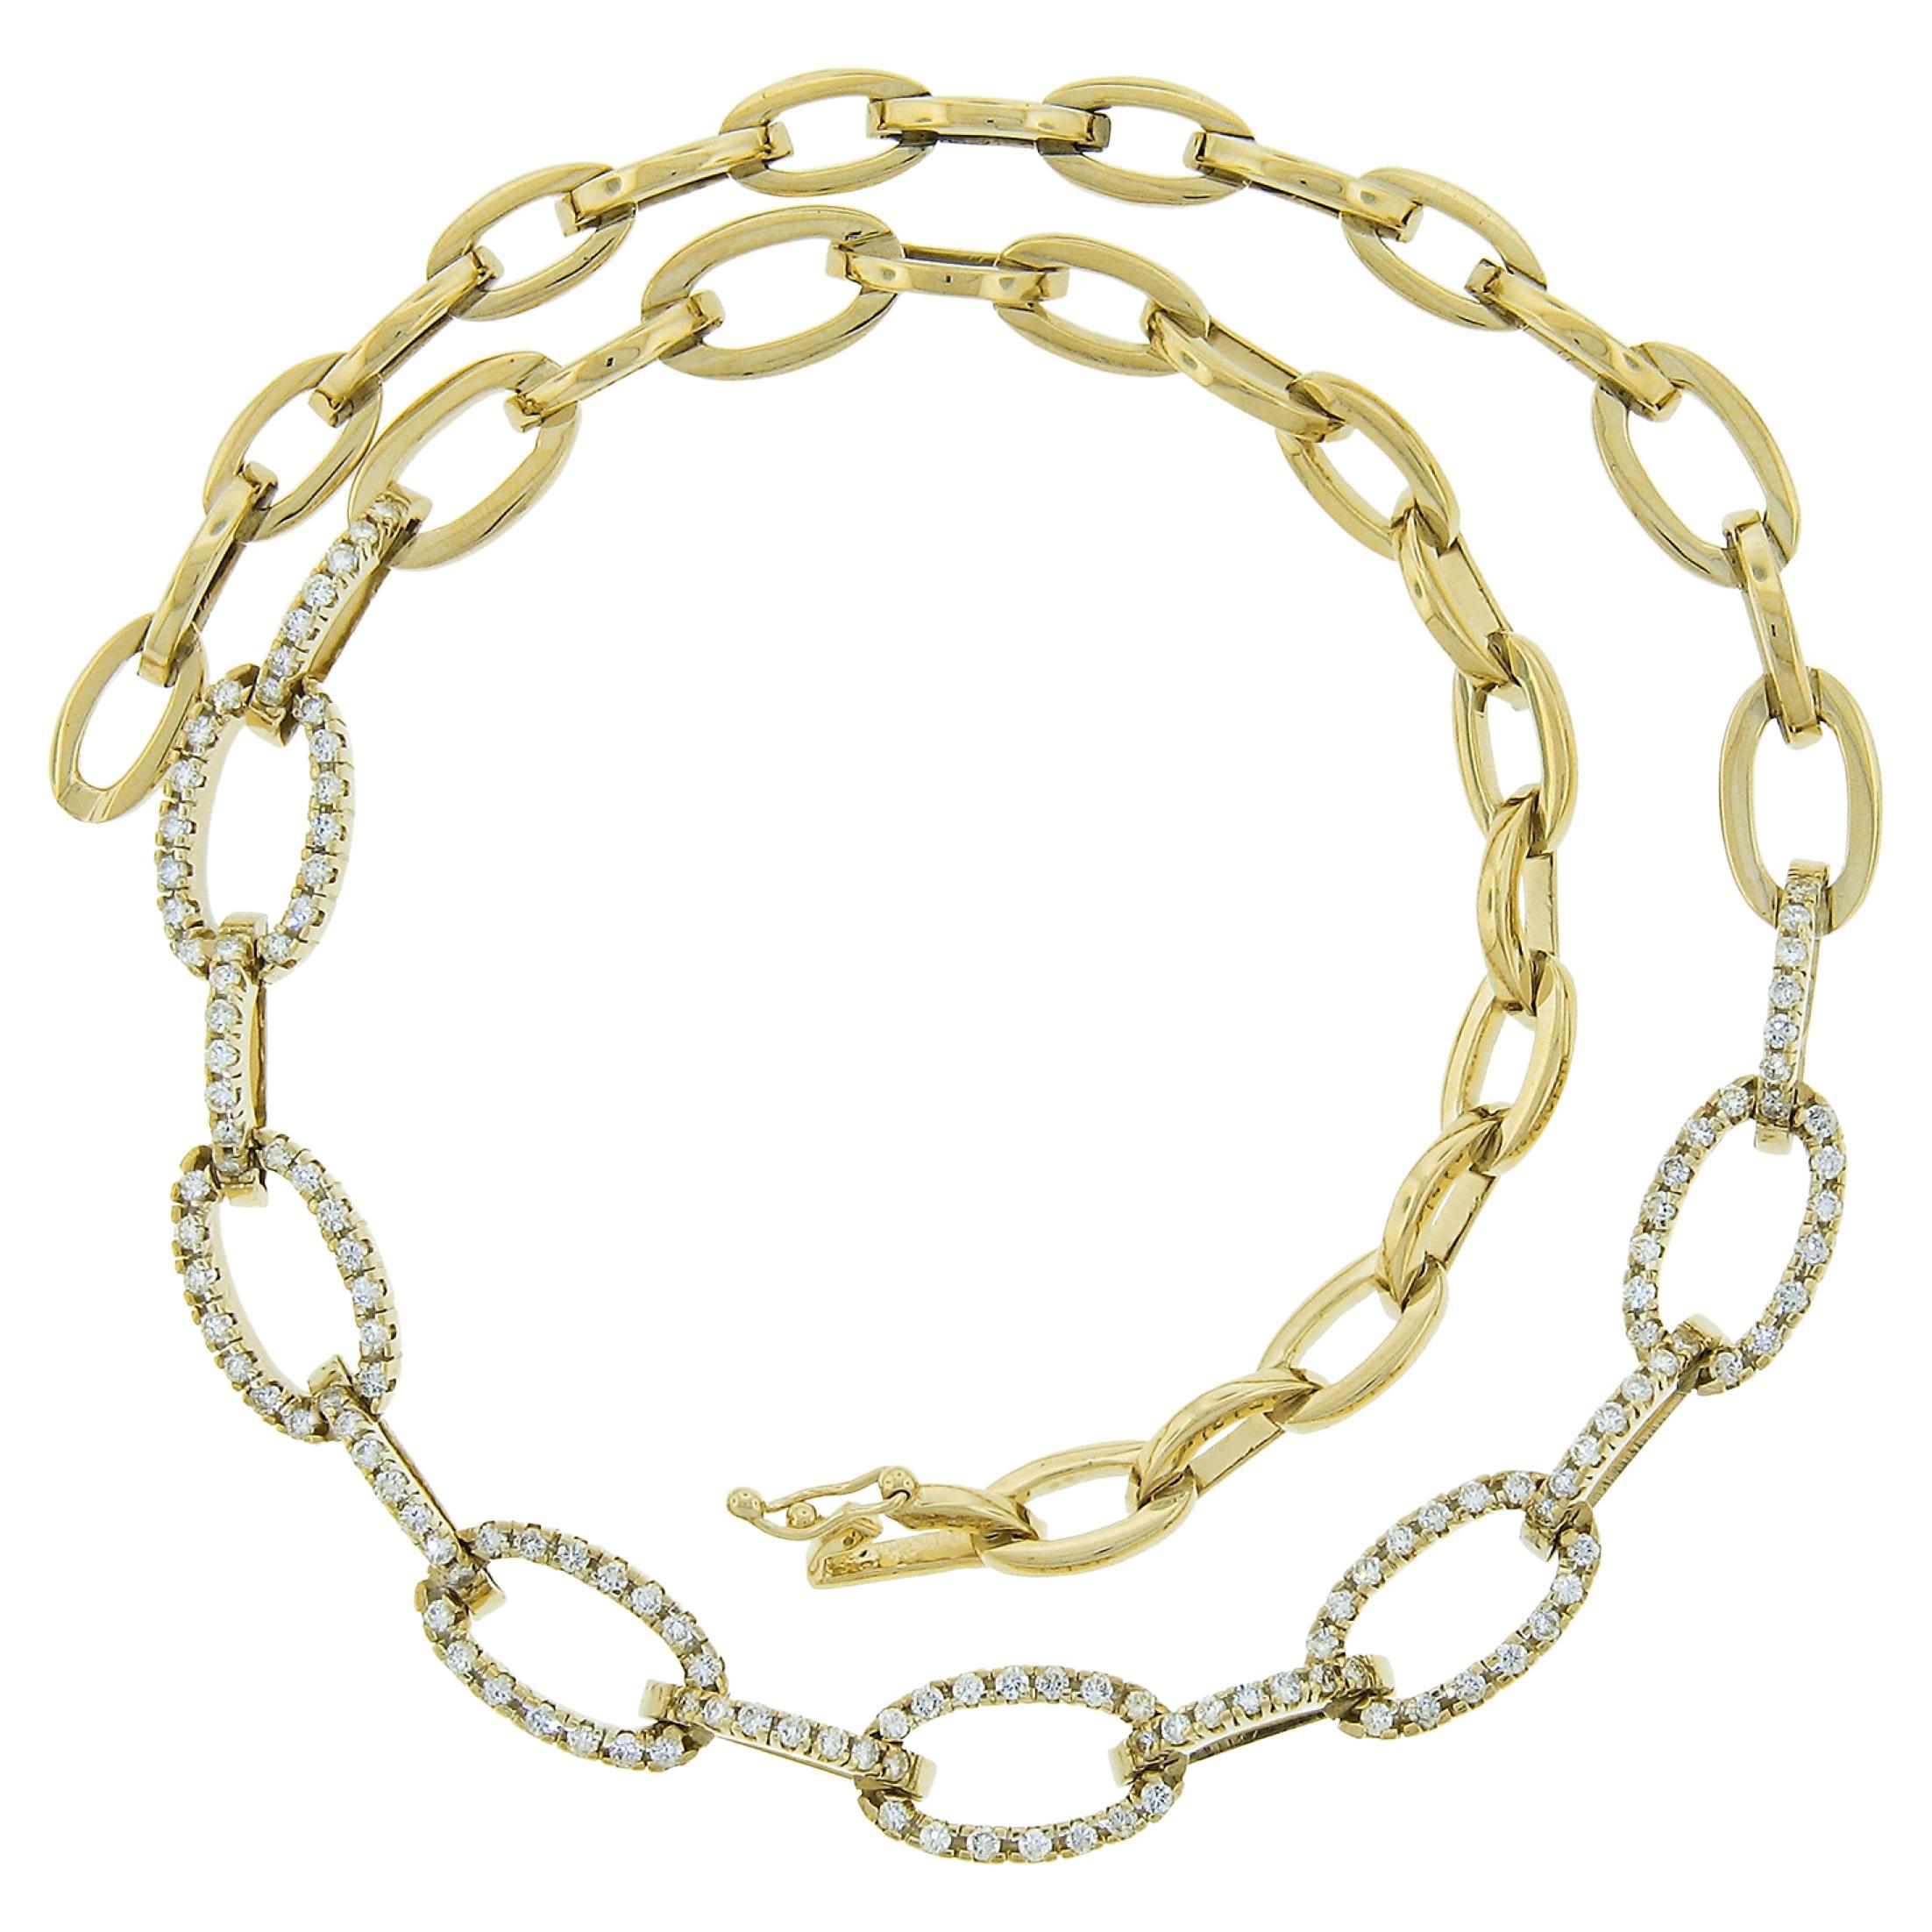 14K Gelbgold 17,25" 2,66ctw Diamant abgestufte offene ovale Link Kette Halskette